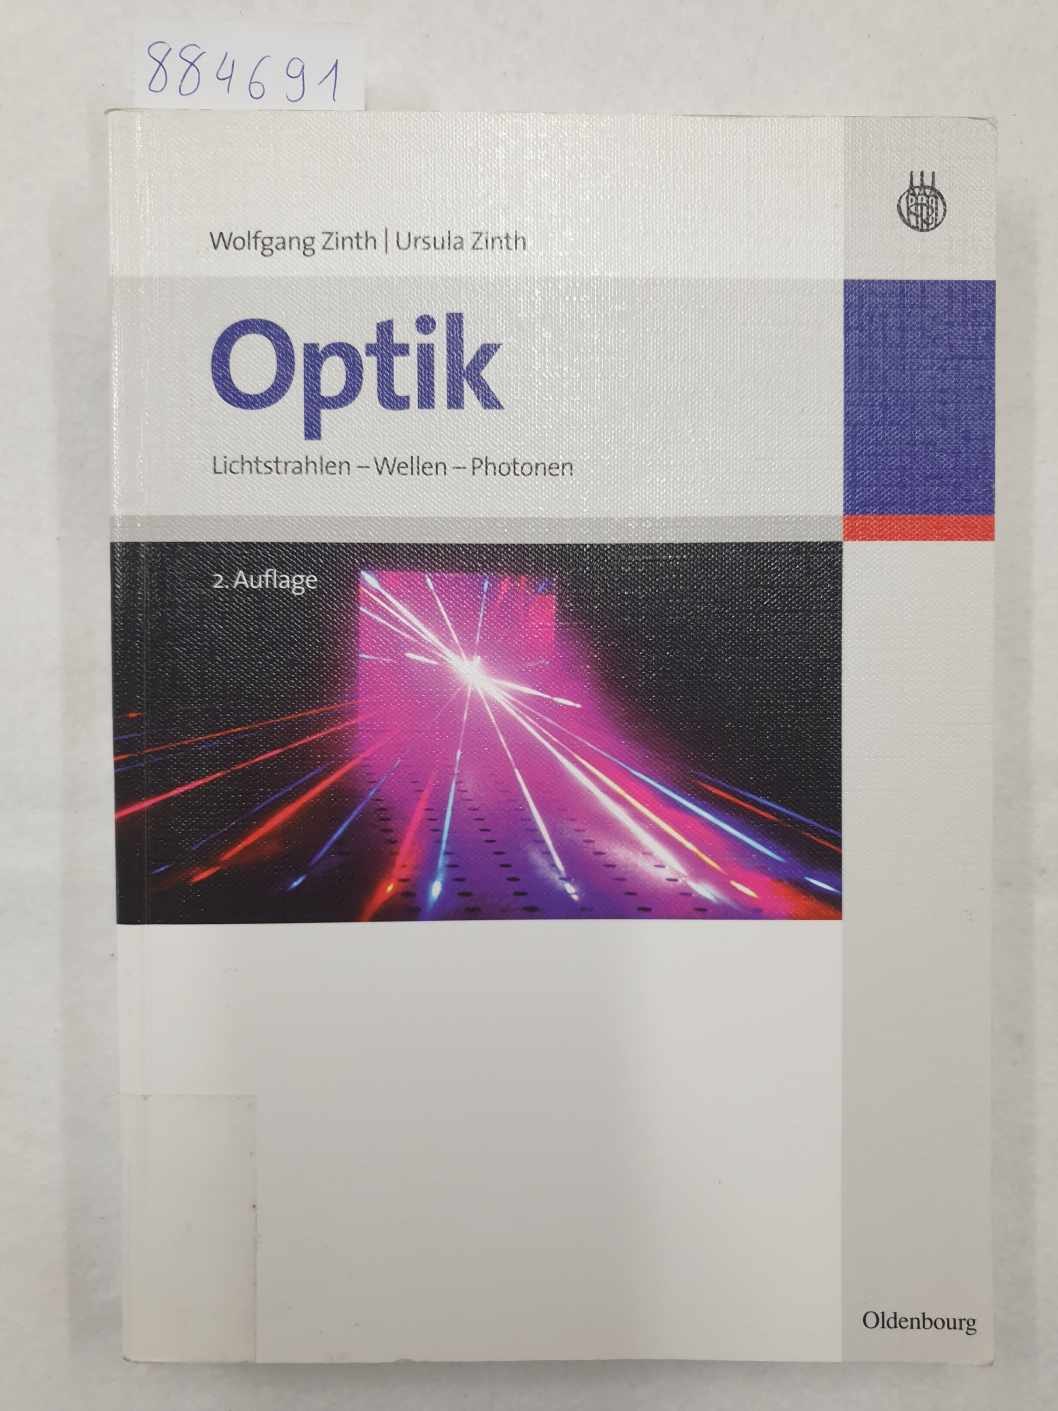 Optik - Lichtstrahlen - Wellen - Photonen : - Zinth, Wolfgang und Ursula Aumüller